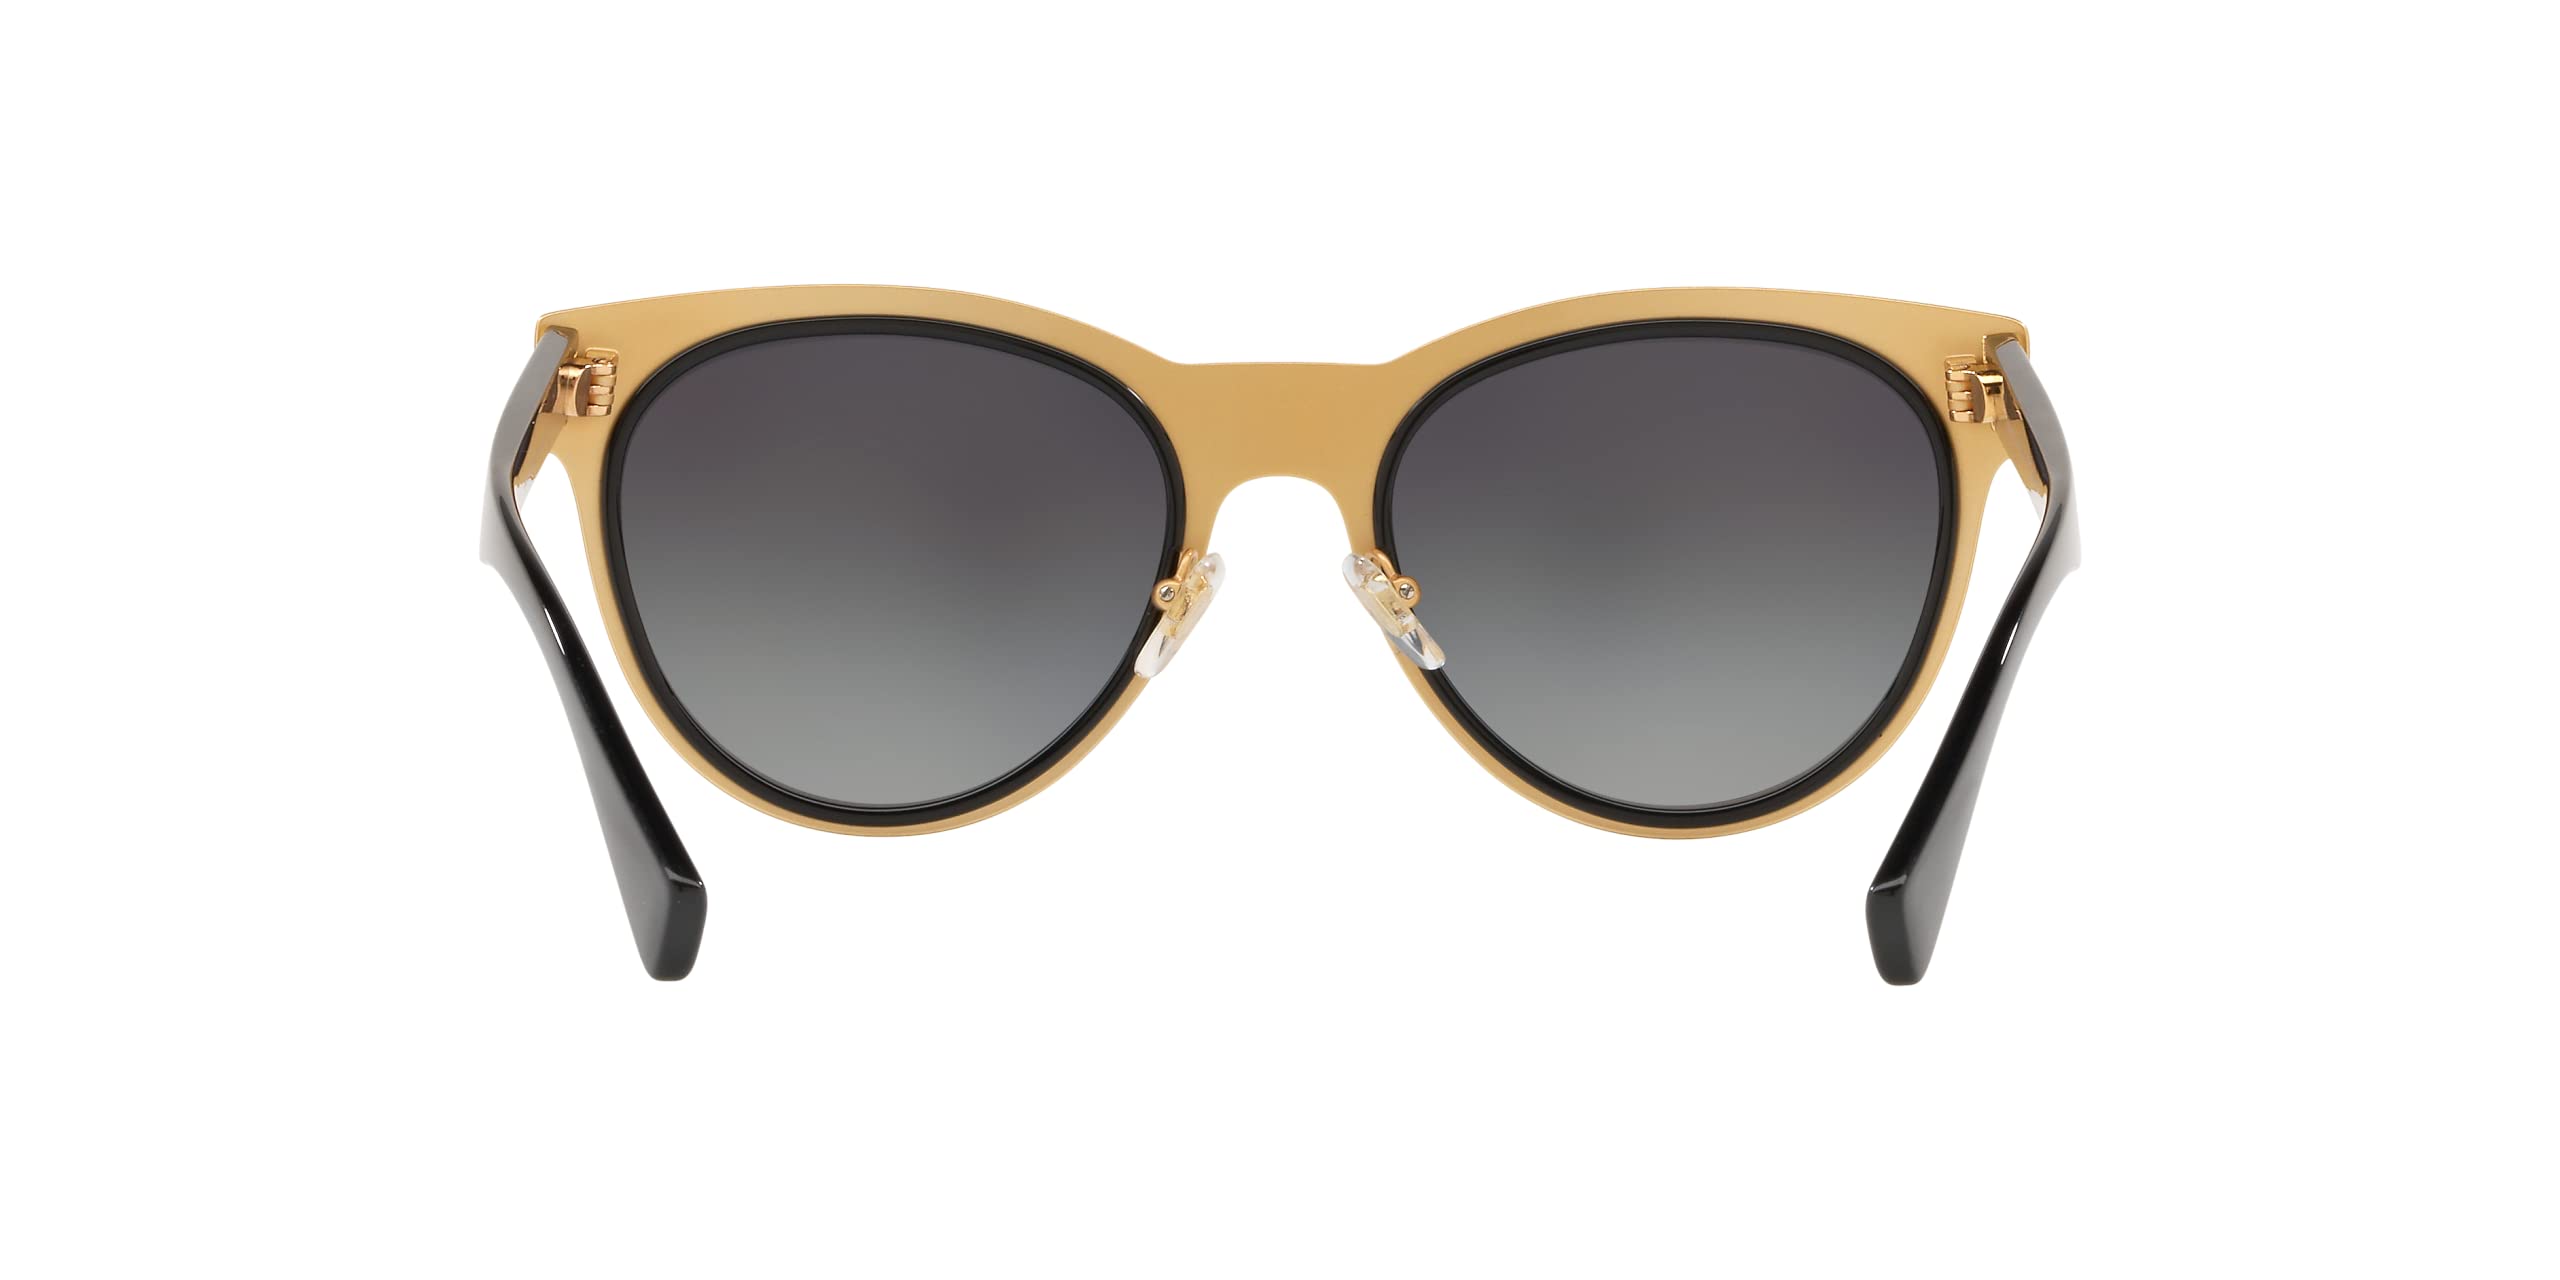 Versace Woman Sunglasses Black Frame, Light Grey Gradient Grey Lenses, 54MM